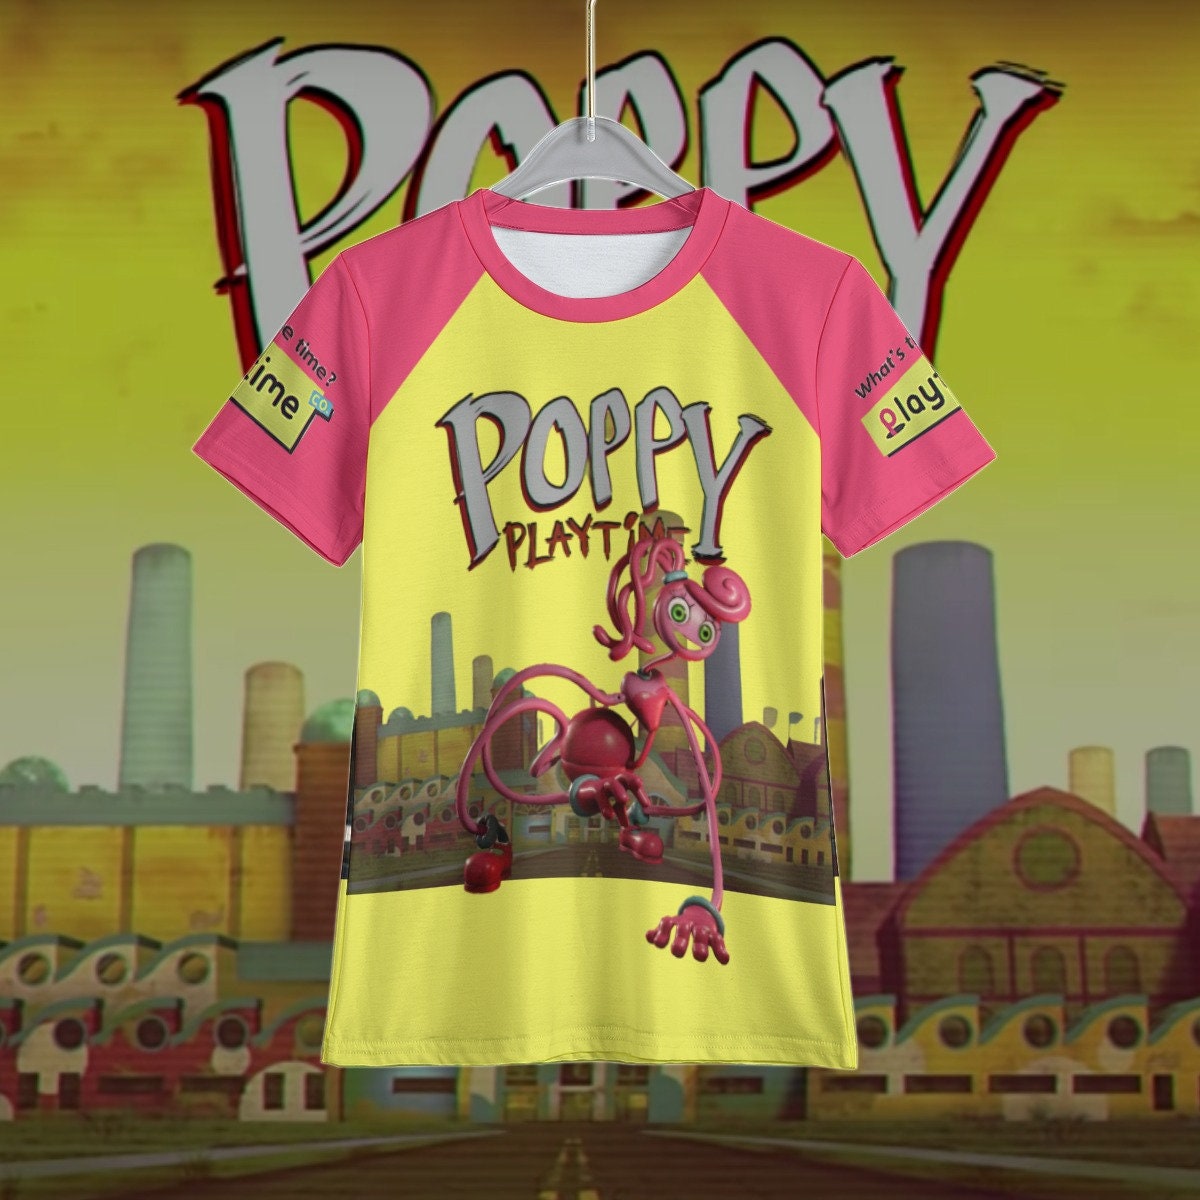 Poppy Playtime Boys' Bad Guys Huggy Mommy Long Legs Boxy Boo T-Shirt